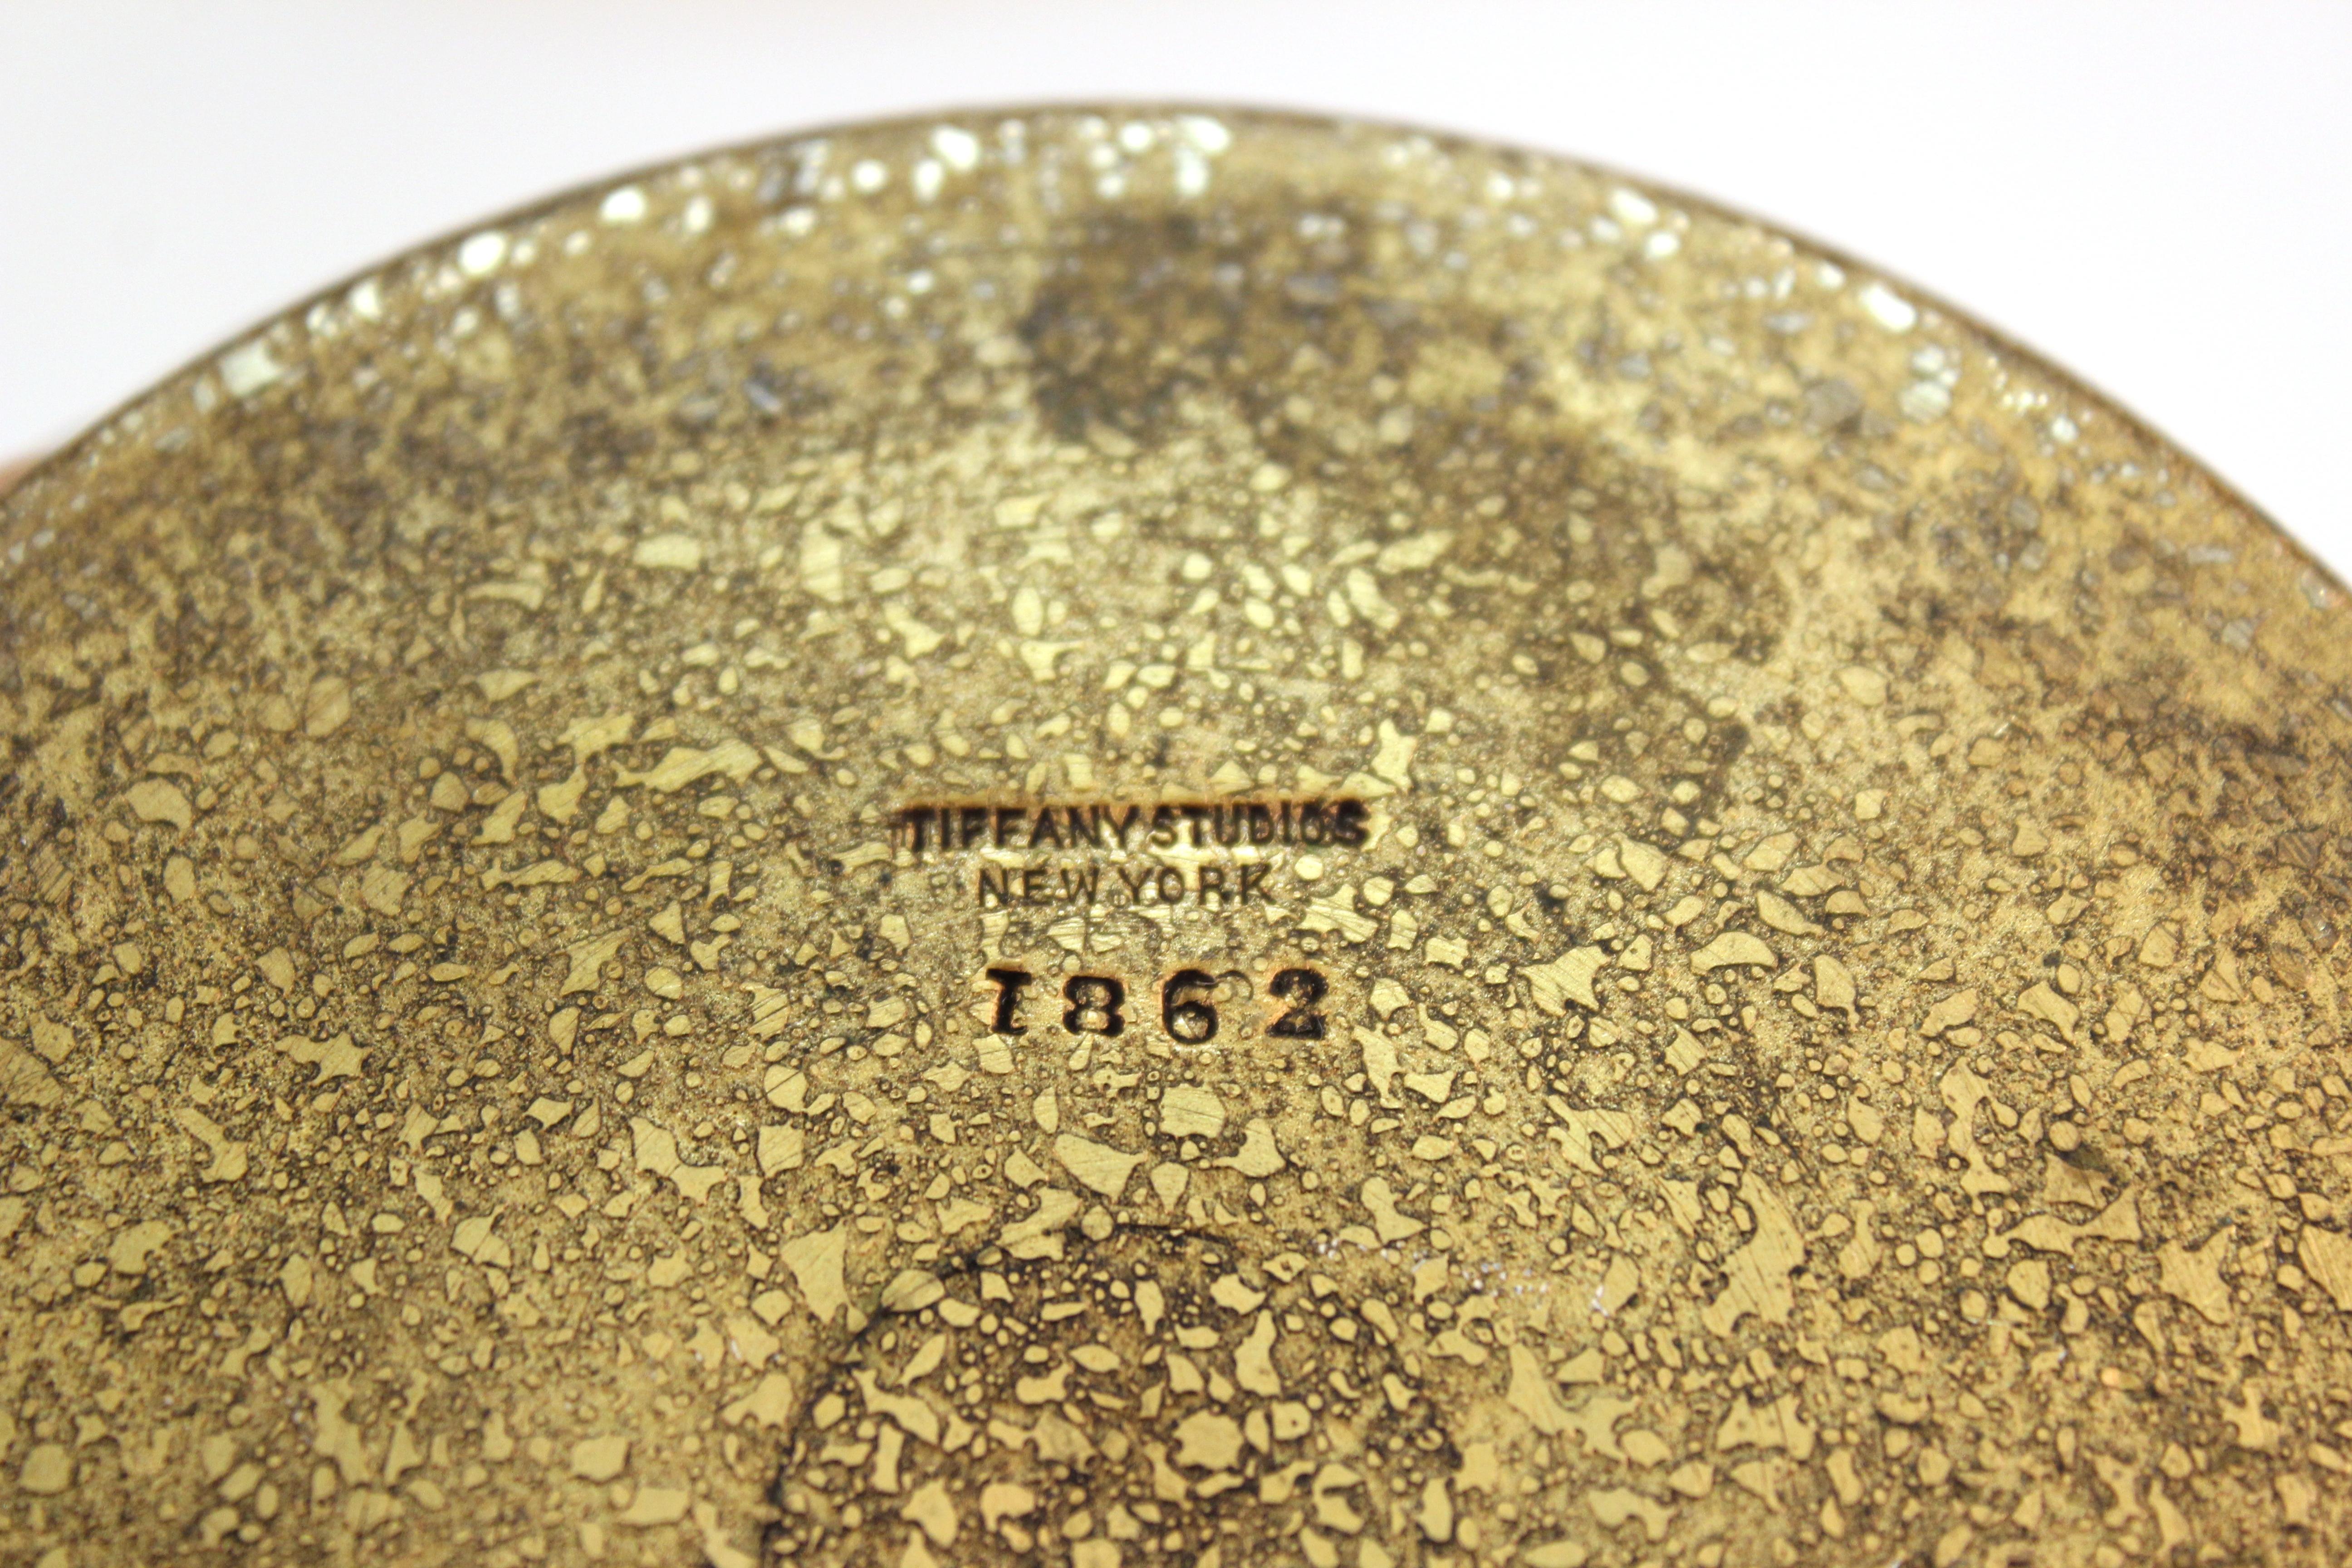 Tiffany Studios New York Gilded Age Heavy Gilt Bronze Urns For Sale 2